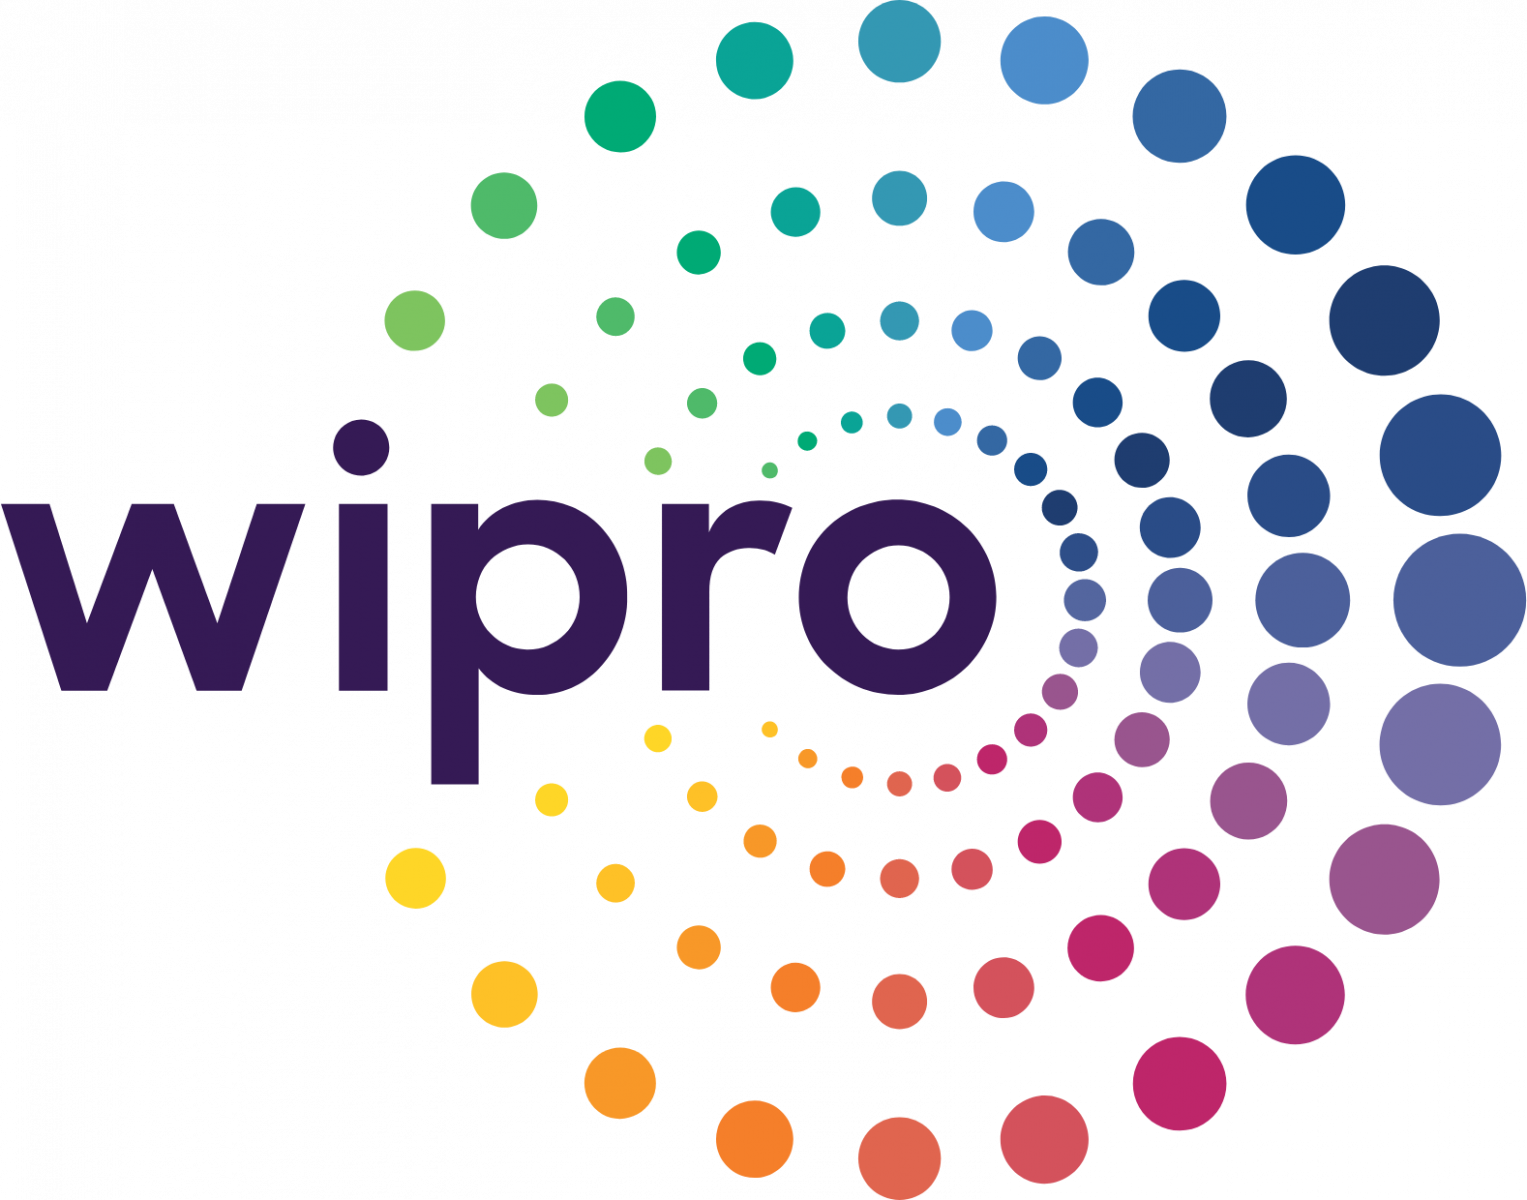 Wipro It companies in Chengalpattu